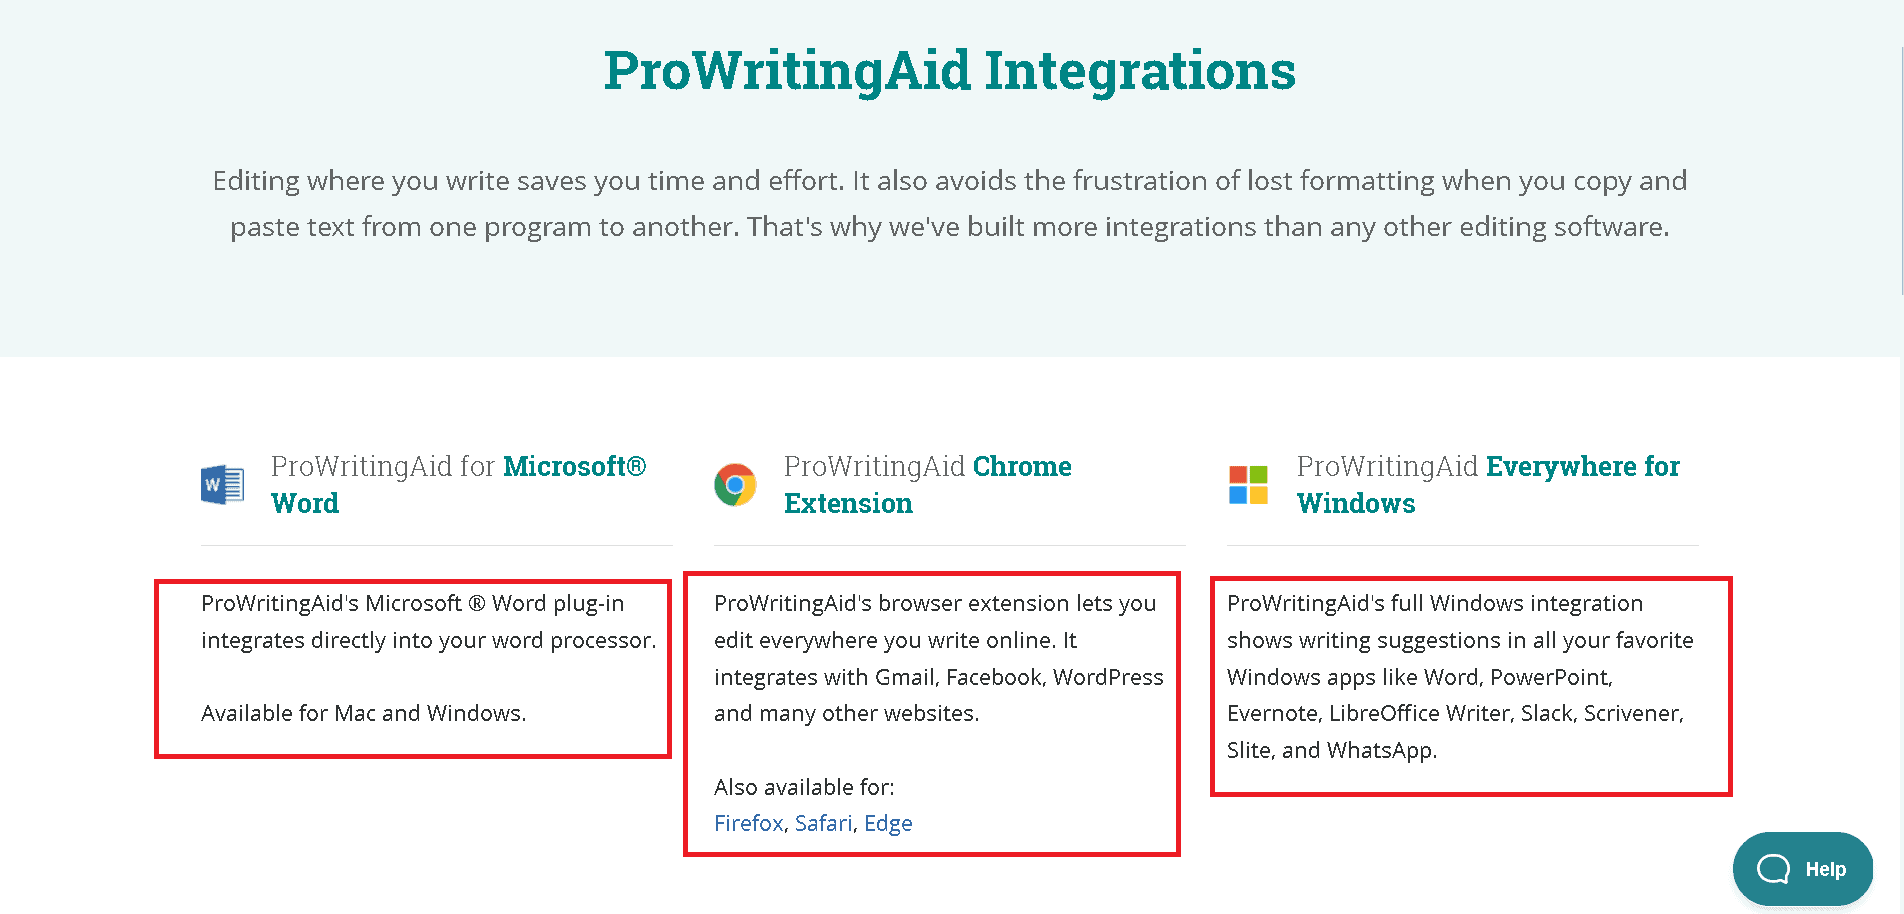 Prowritingaid Grammar Checker integrations